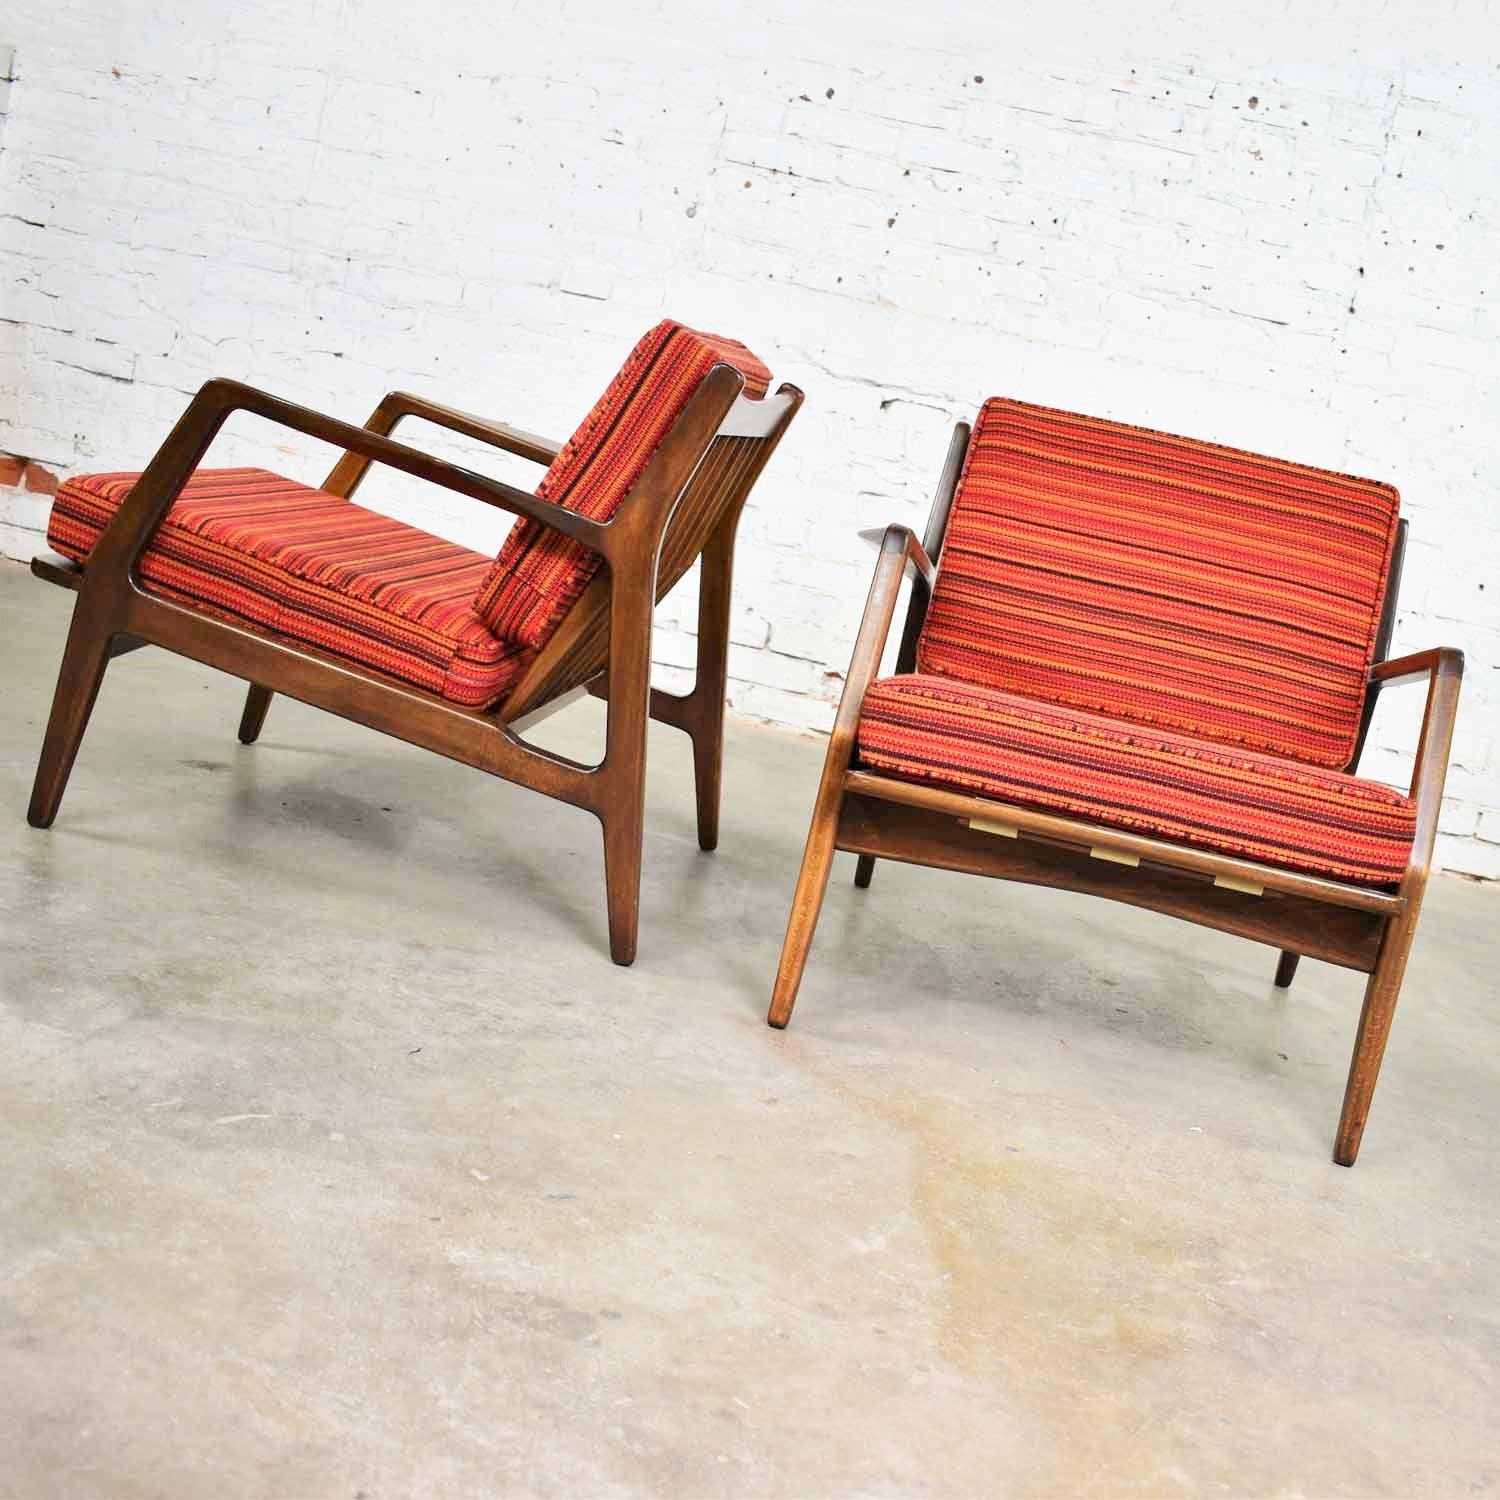 Danish Scandinavian Modern Ib Kofod-Larsen Lounge Chairs for Selig in Red Stripe Fabric